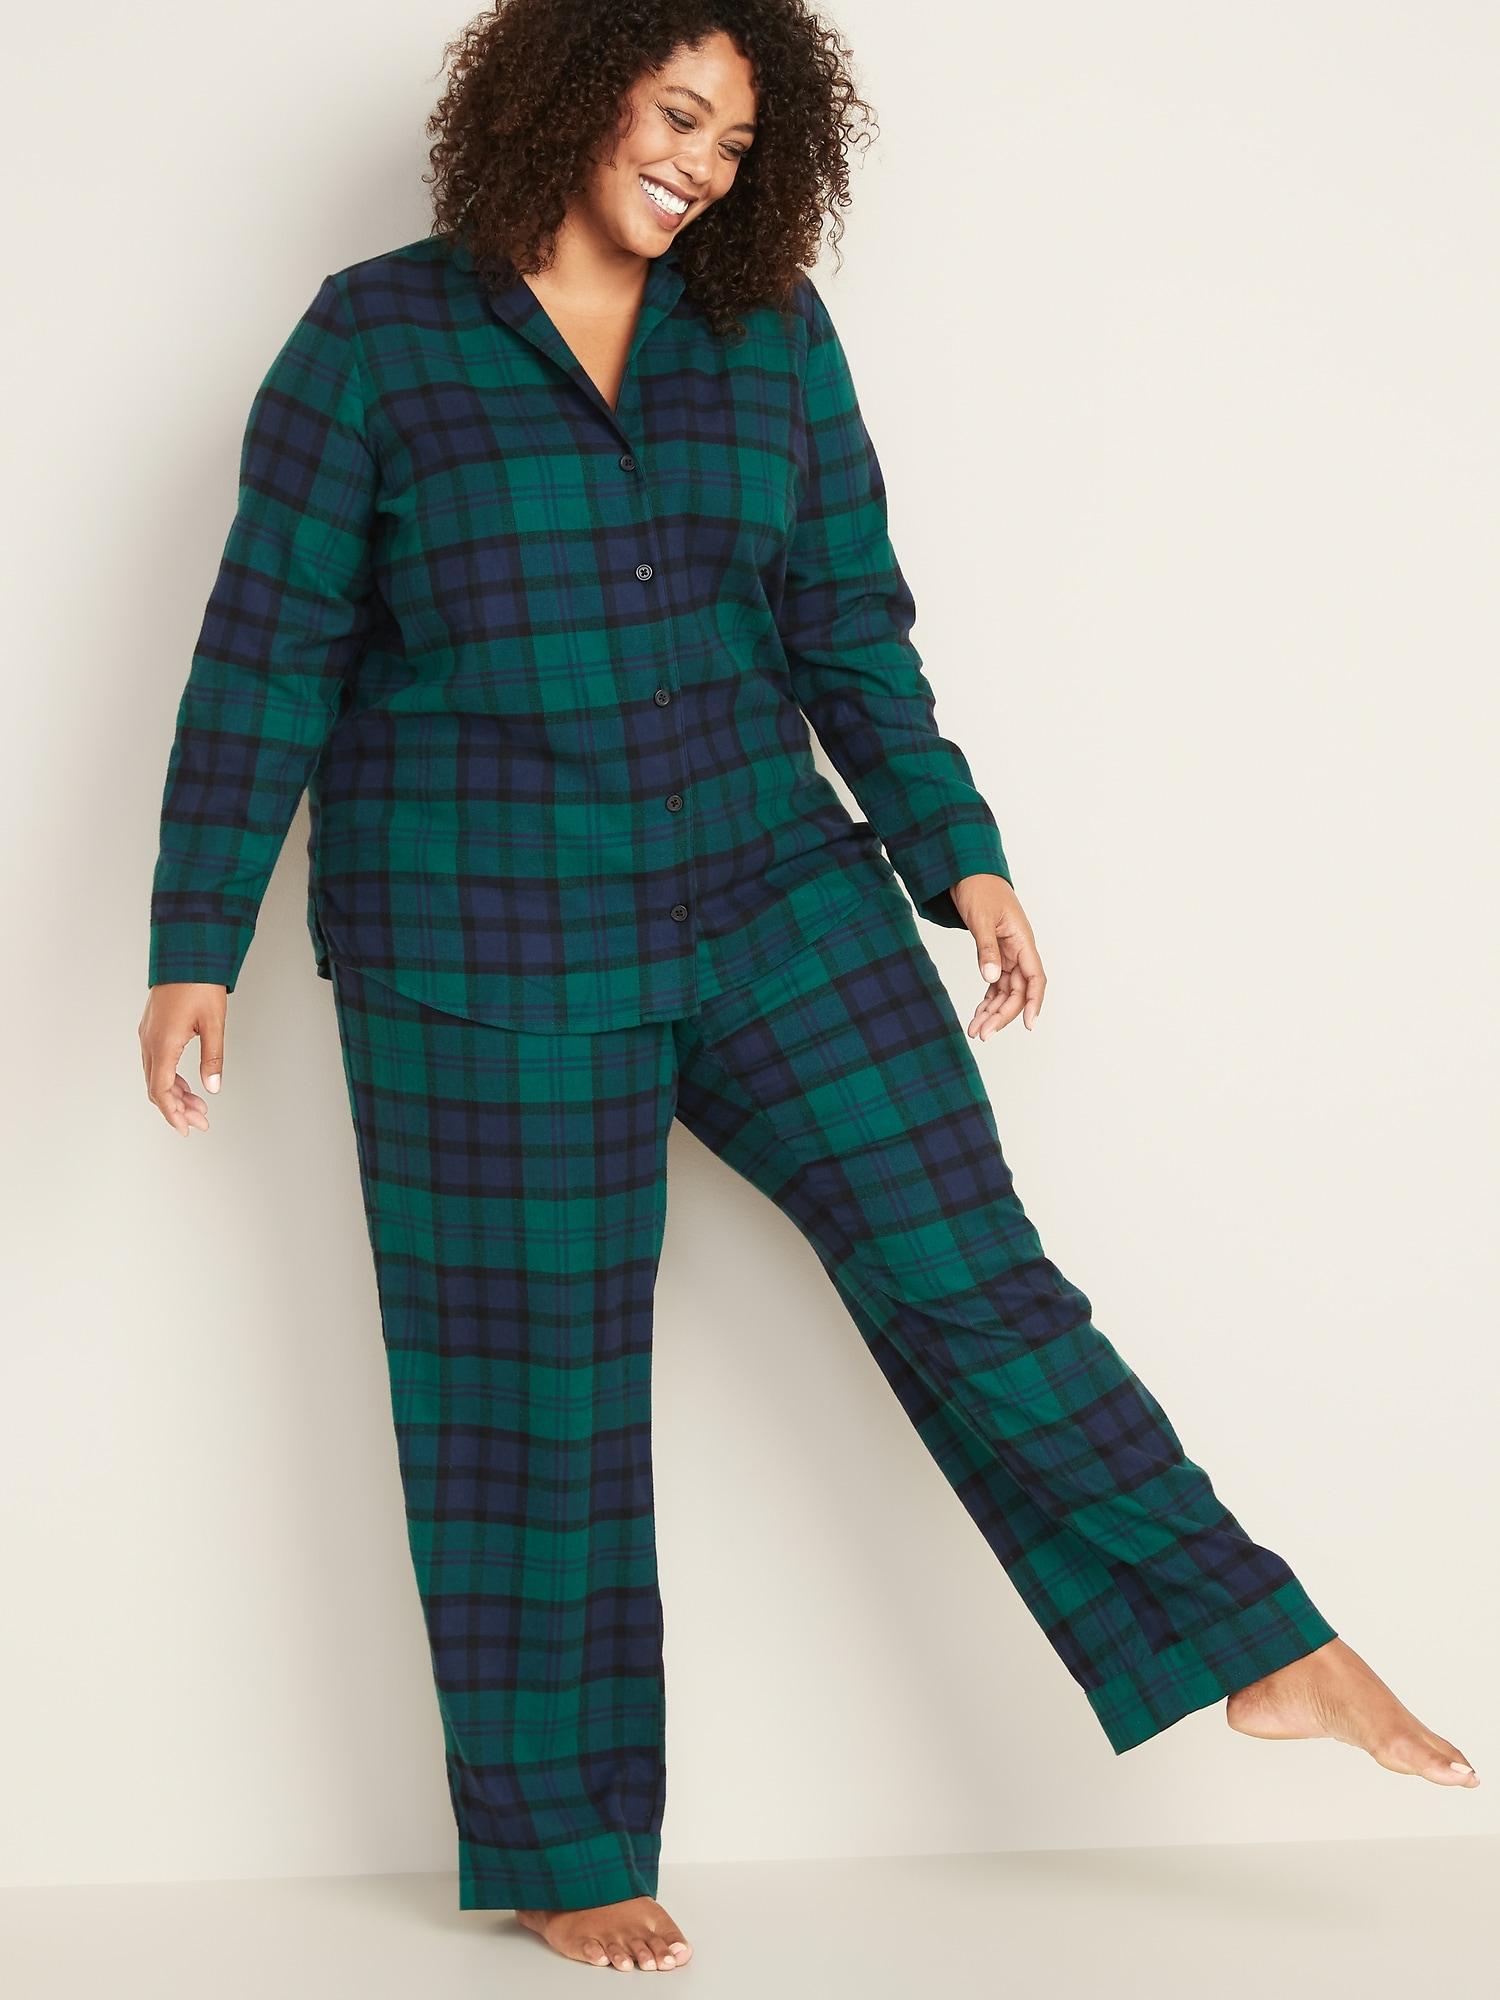 Navy Flannel Pajamas Outlet Shop, UP TO 58% OFF | www.grupoenfoca.com